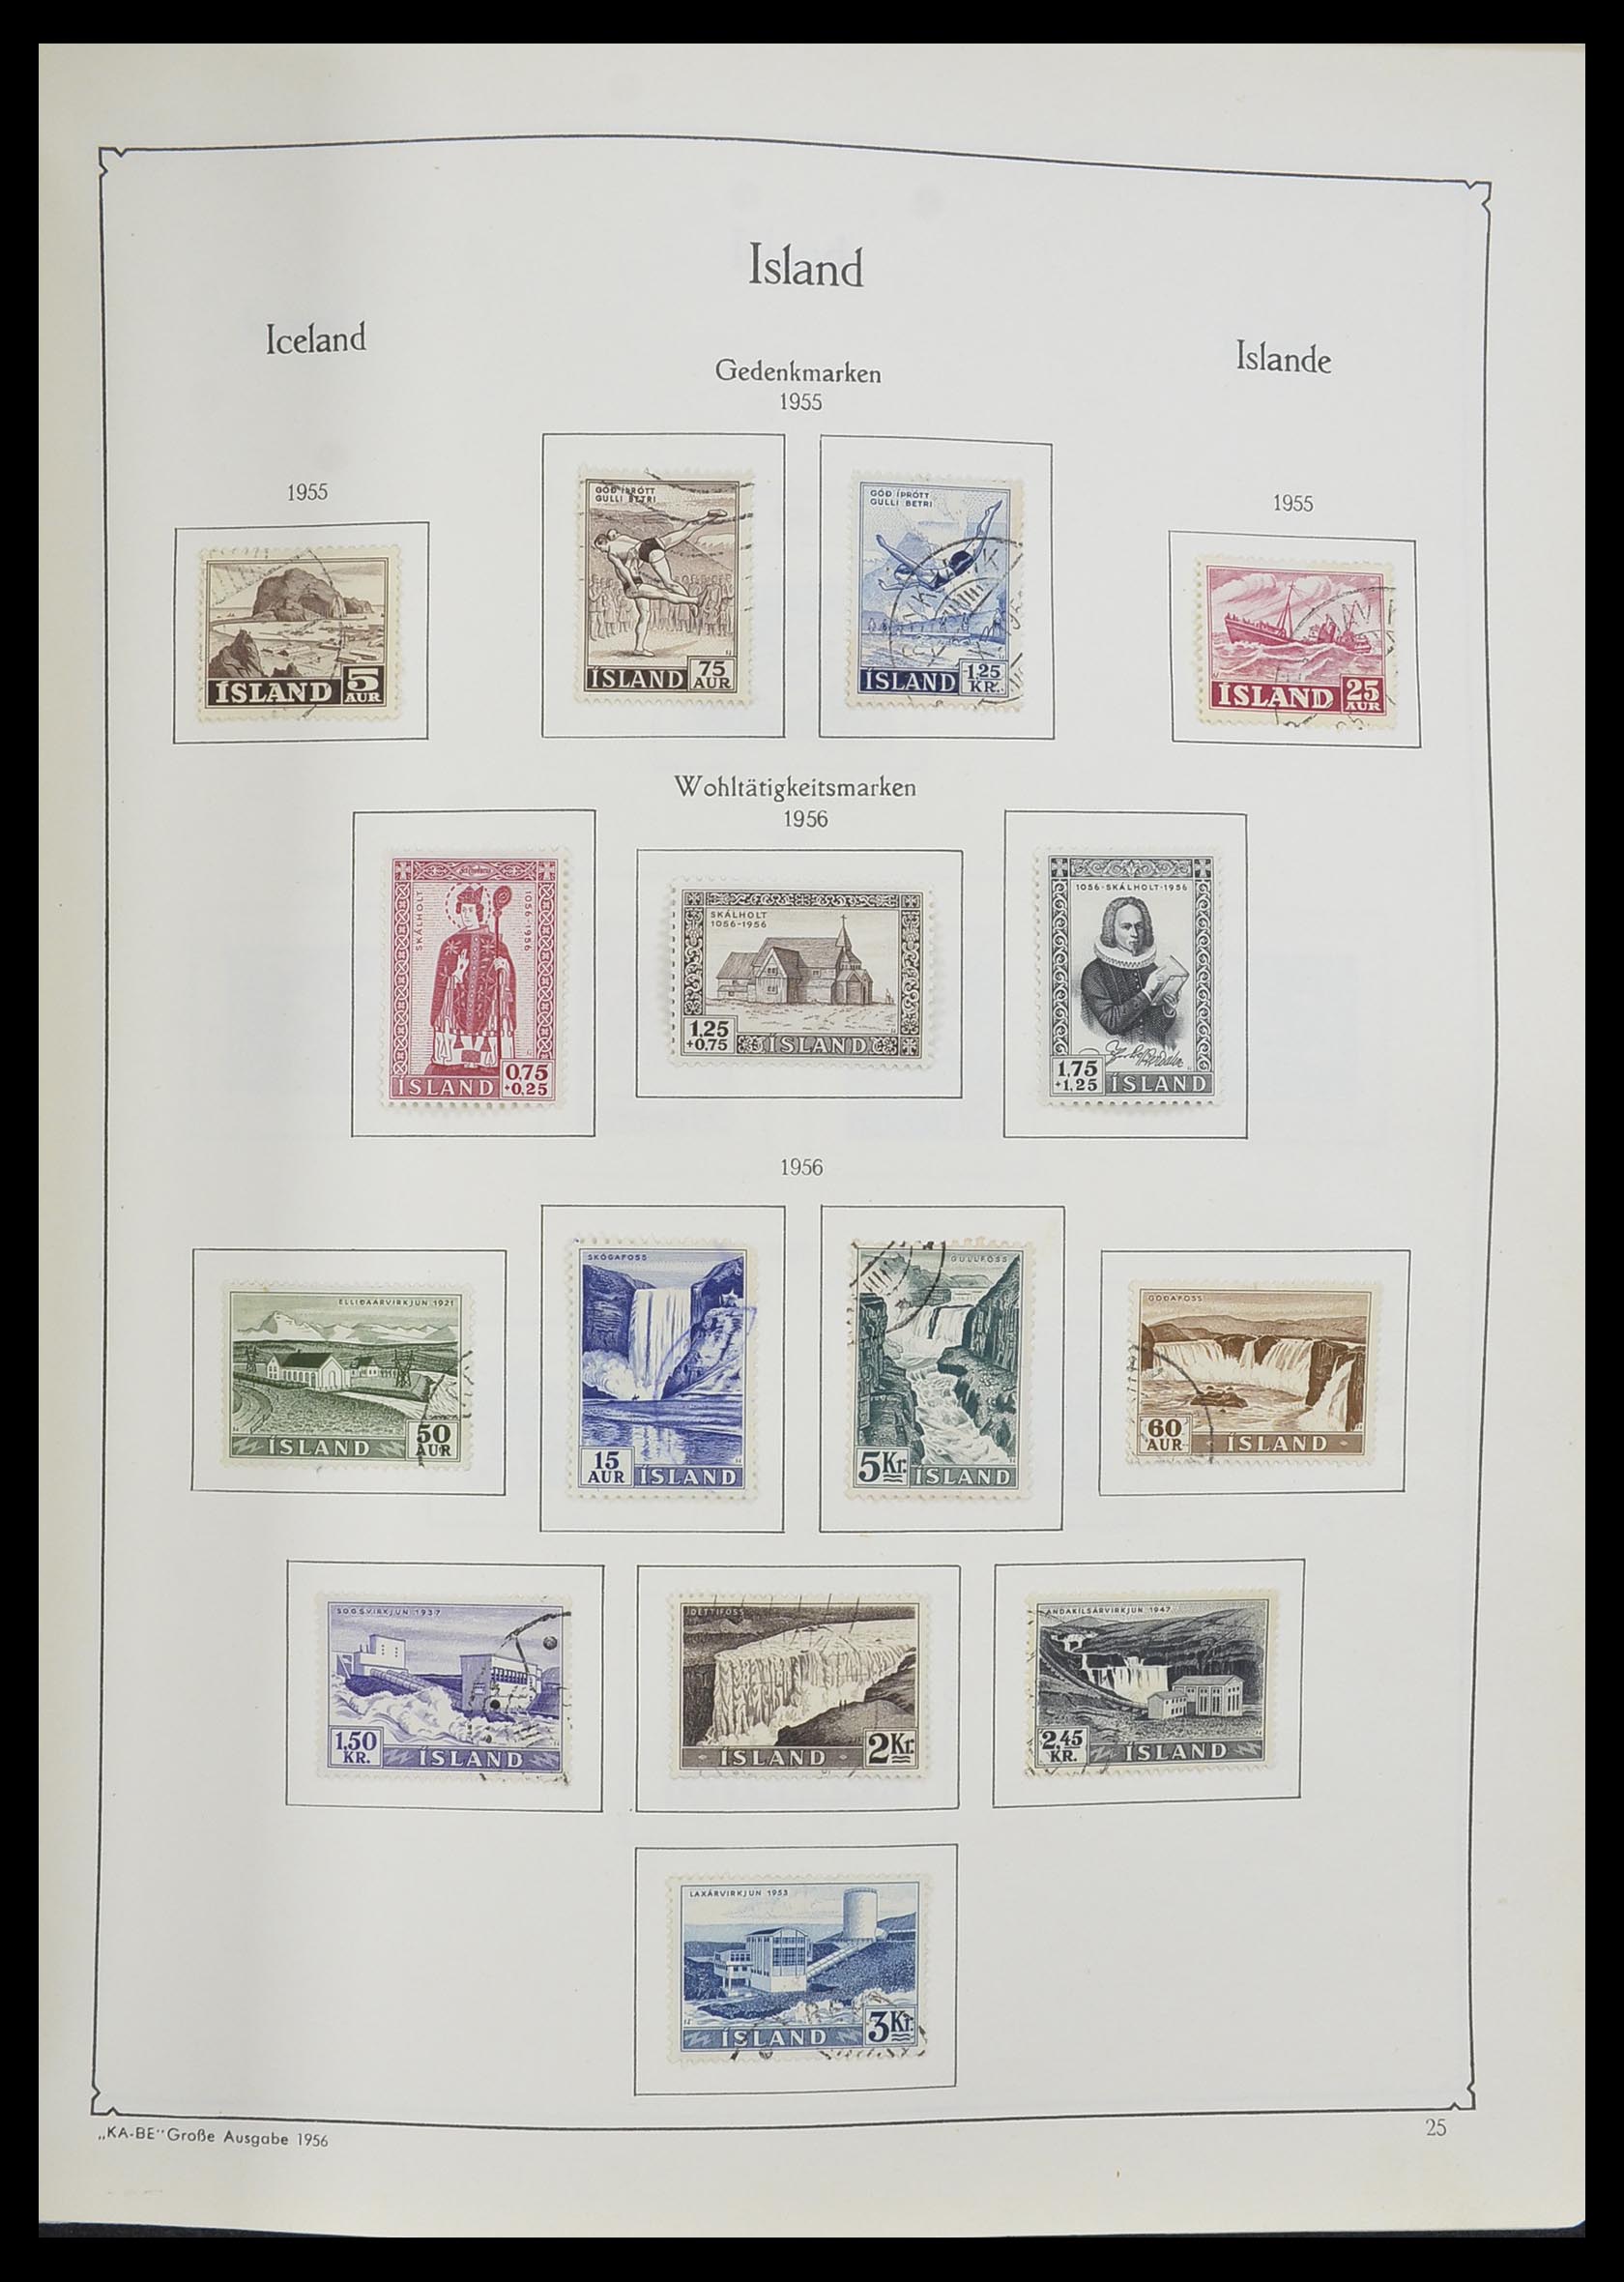 33379 081 - Stamp collection 33379 Scandinavia 1856-1972.